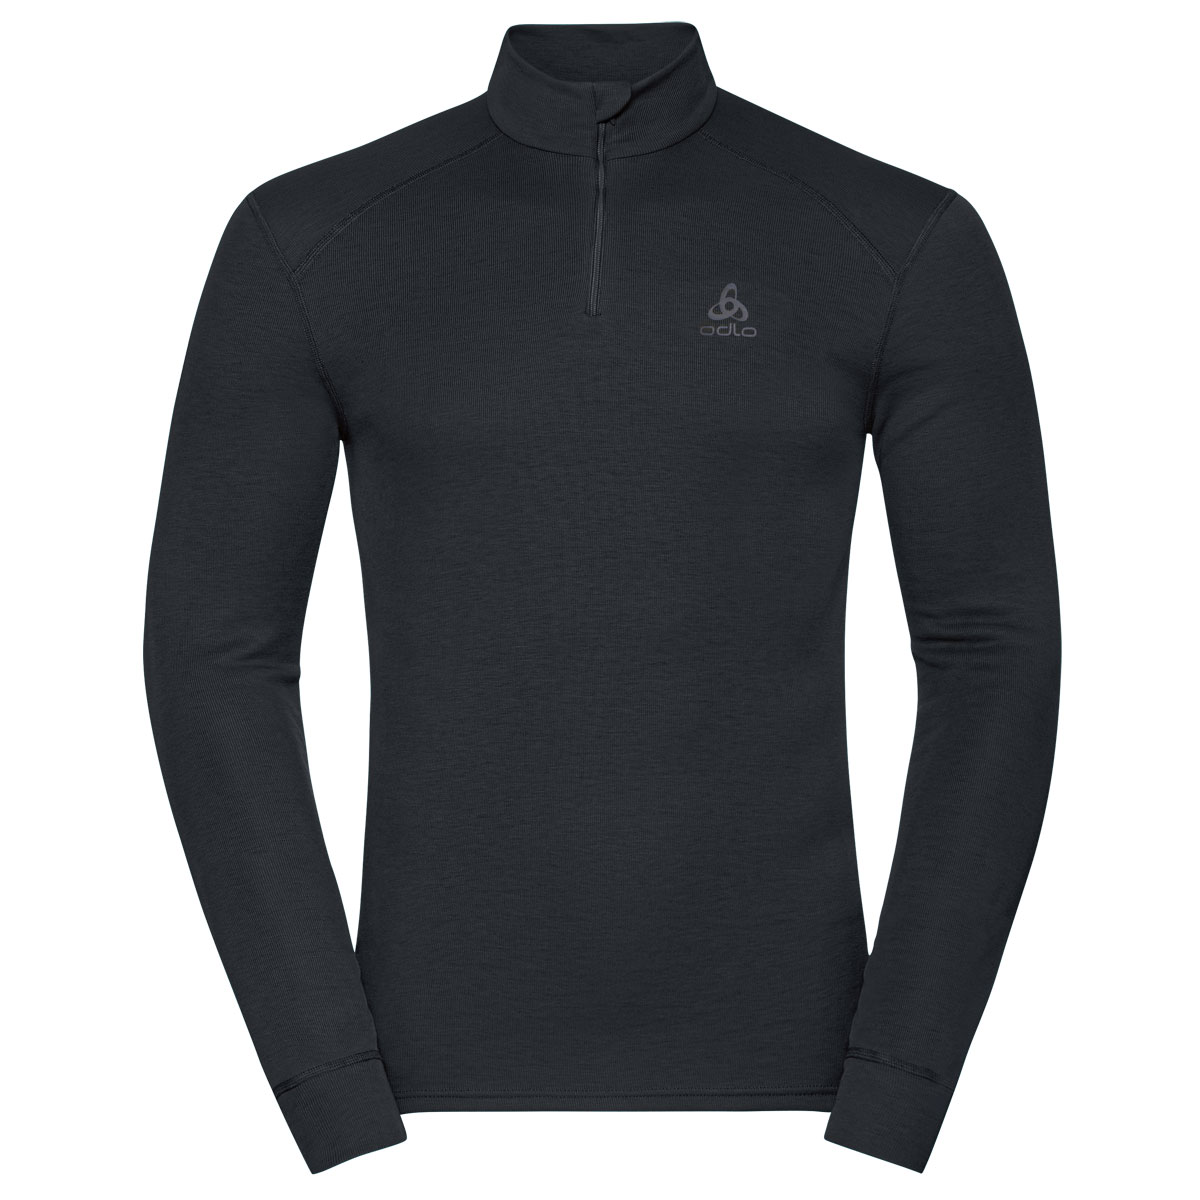 Produktbild von Odlo Active Warm Half-Zip Turtleneck Langarm-Unterhemd Herren - schwarz